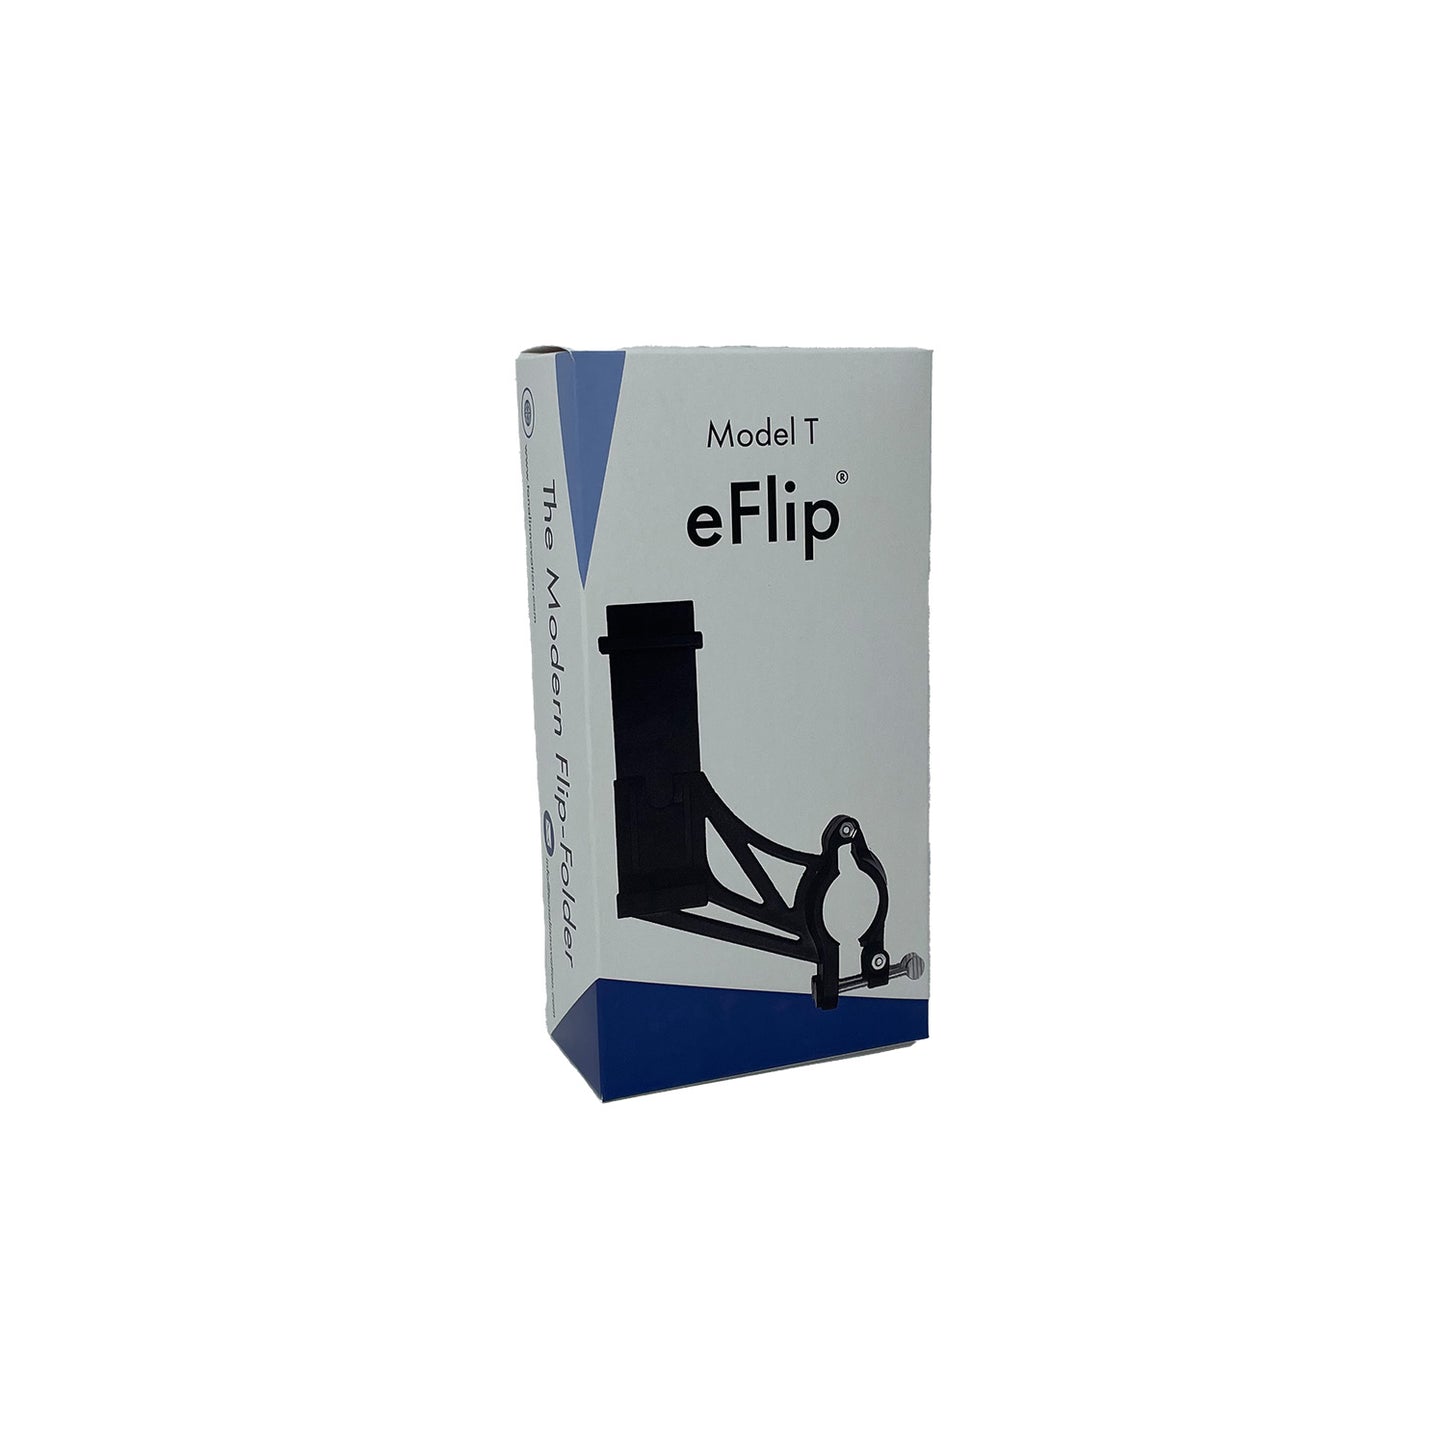 eFlip Model T - Version 1.0